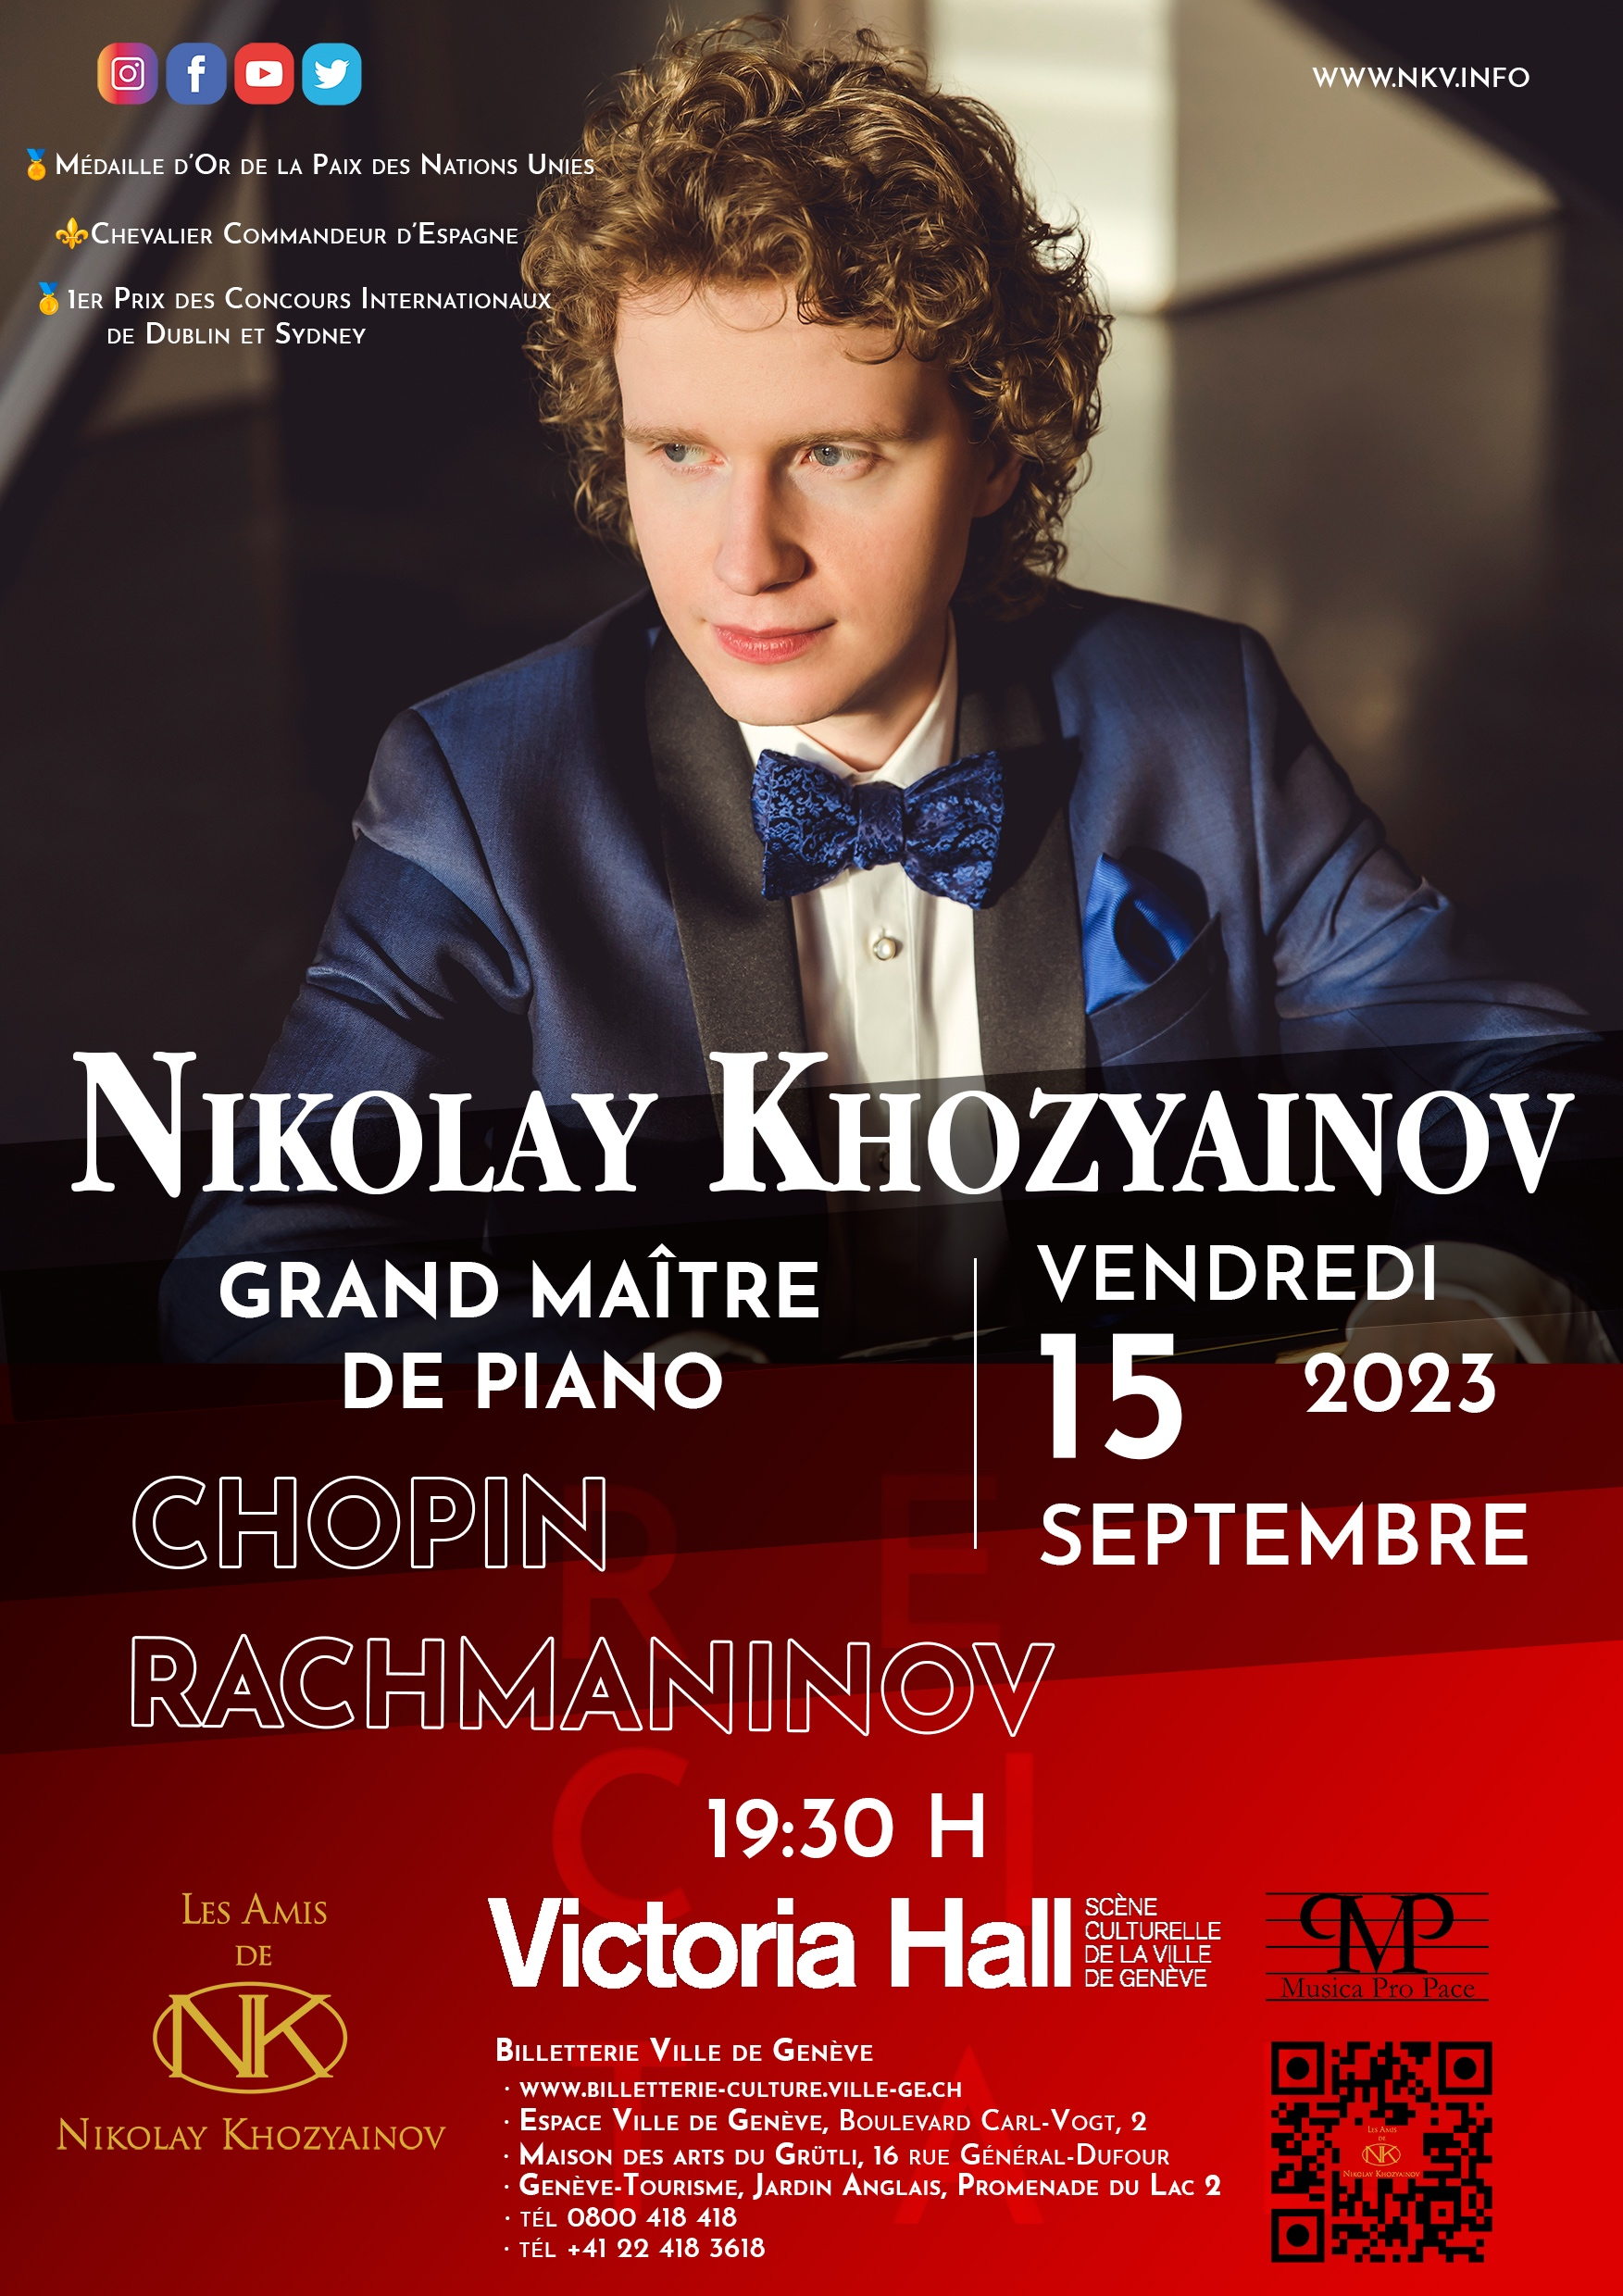 Concert Chopin, Rachmaninov - Maestro Nikolay Khozyainov (piano).